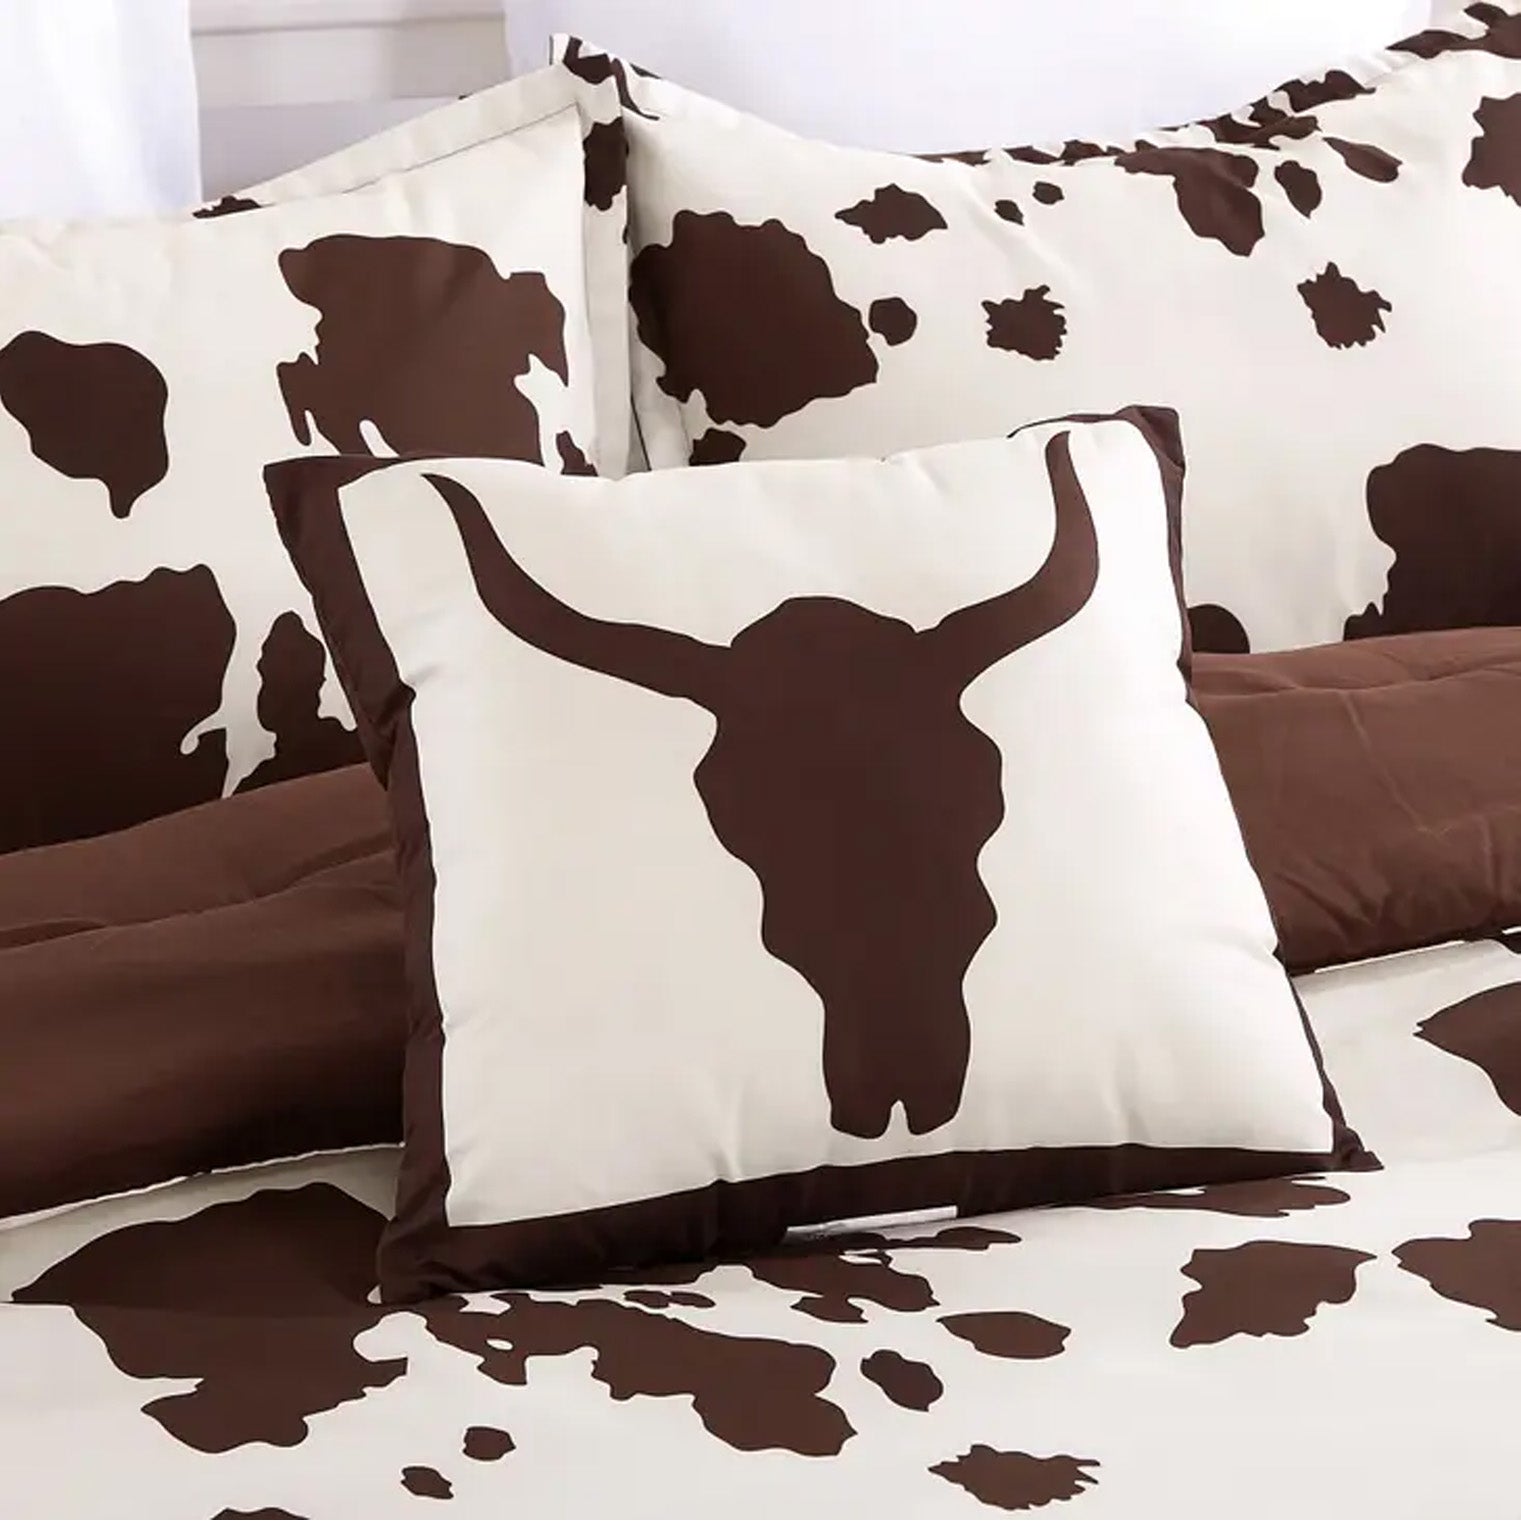 Cowhide Brown Cow Skull Comforter Set - 6 Piece Set